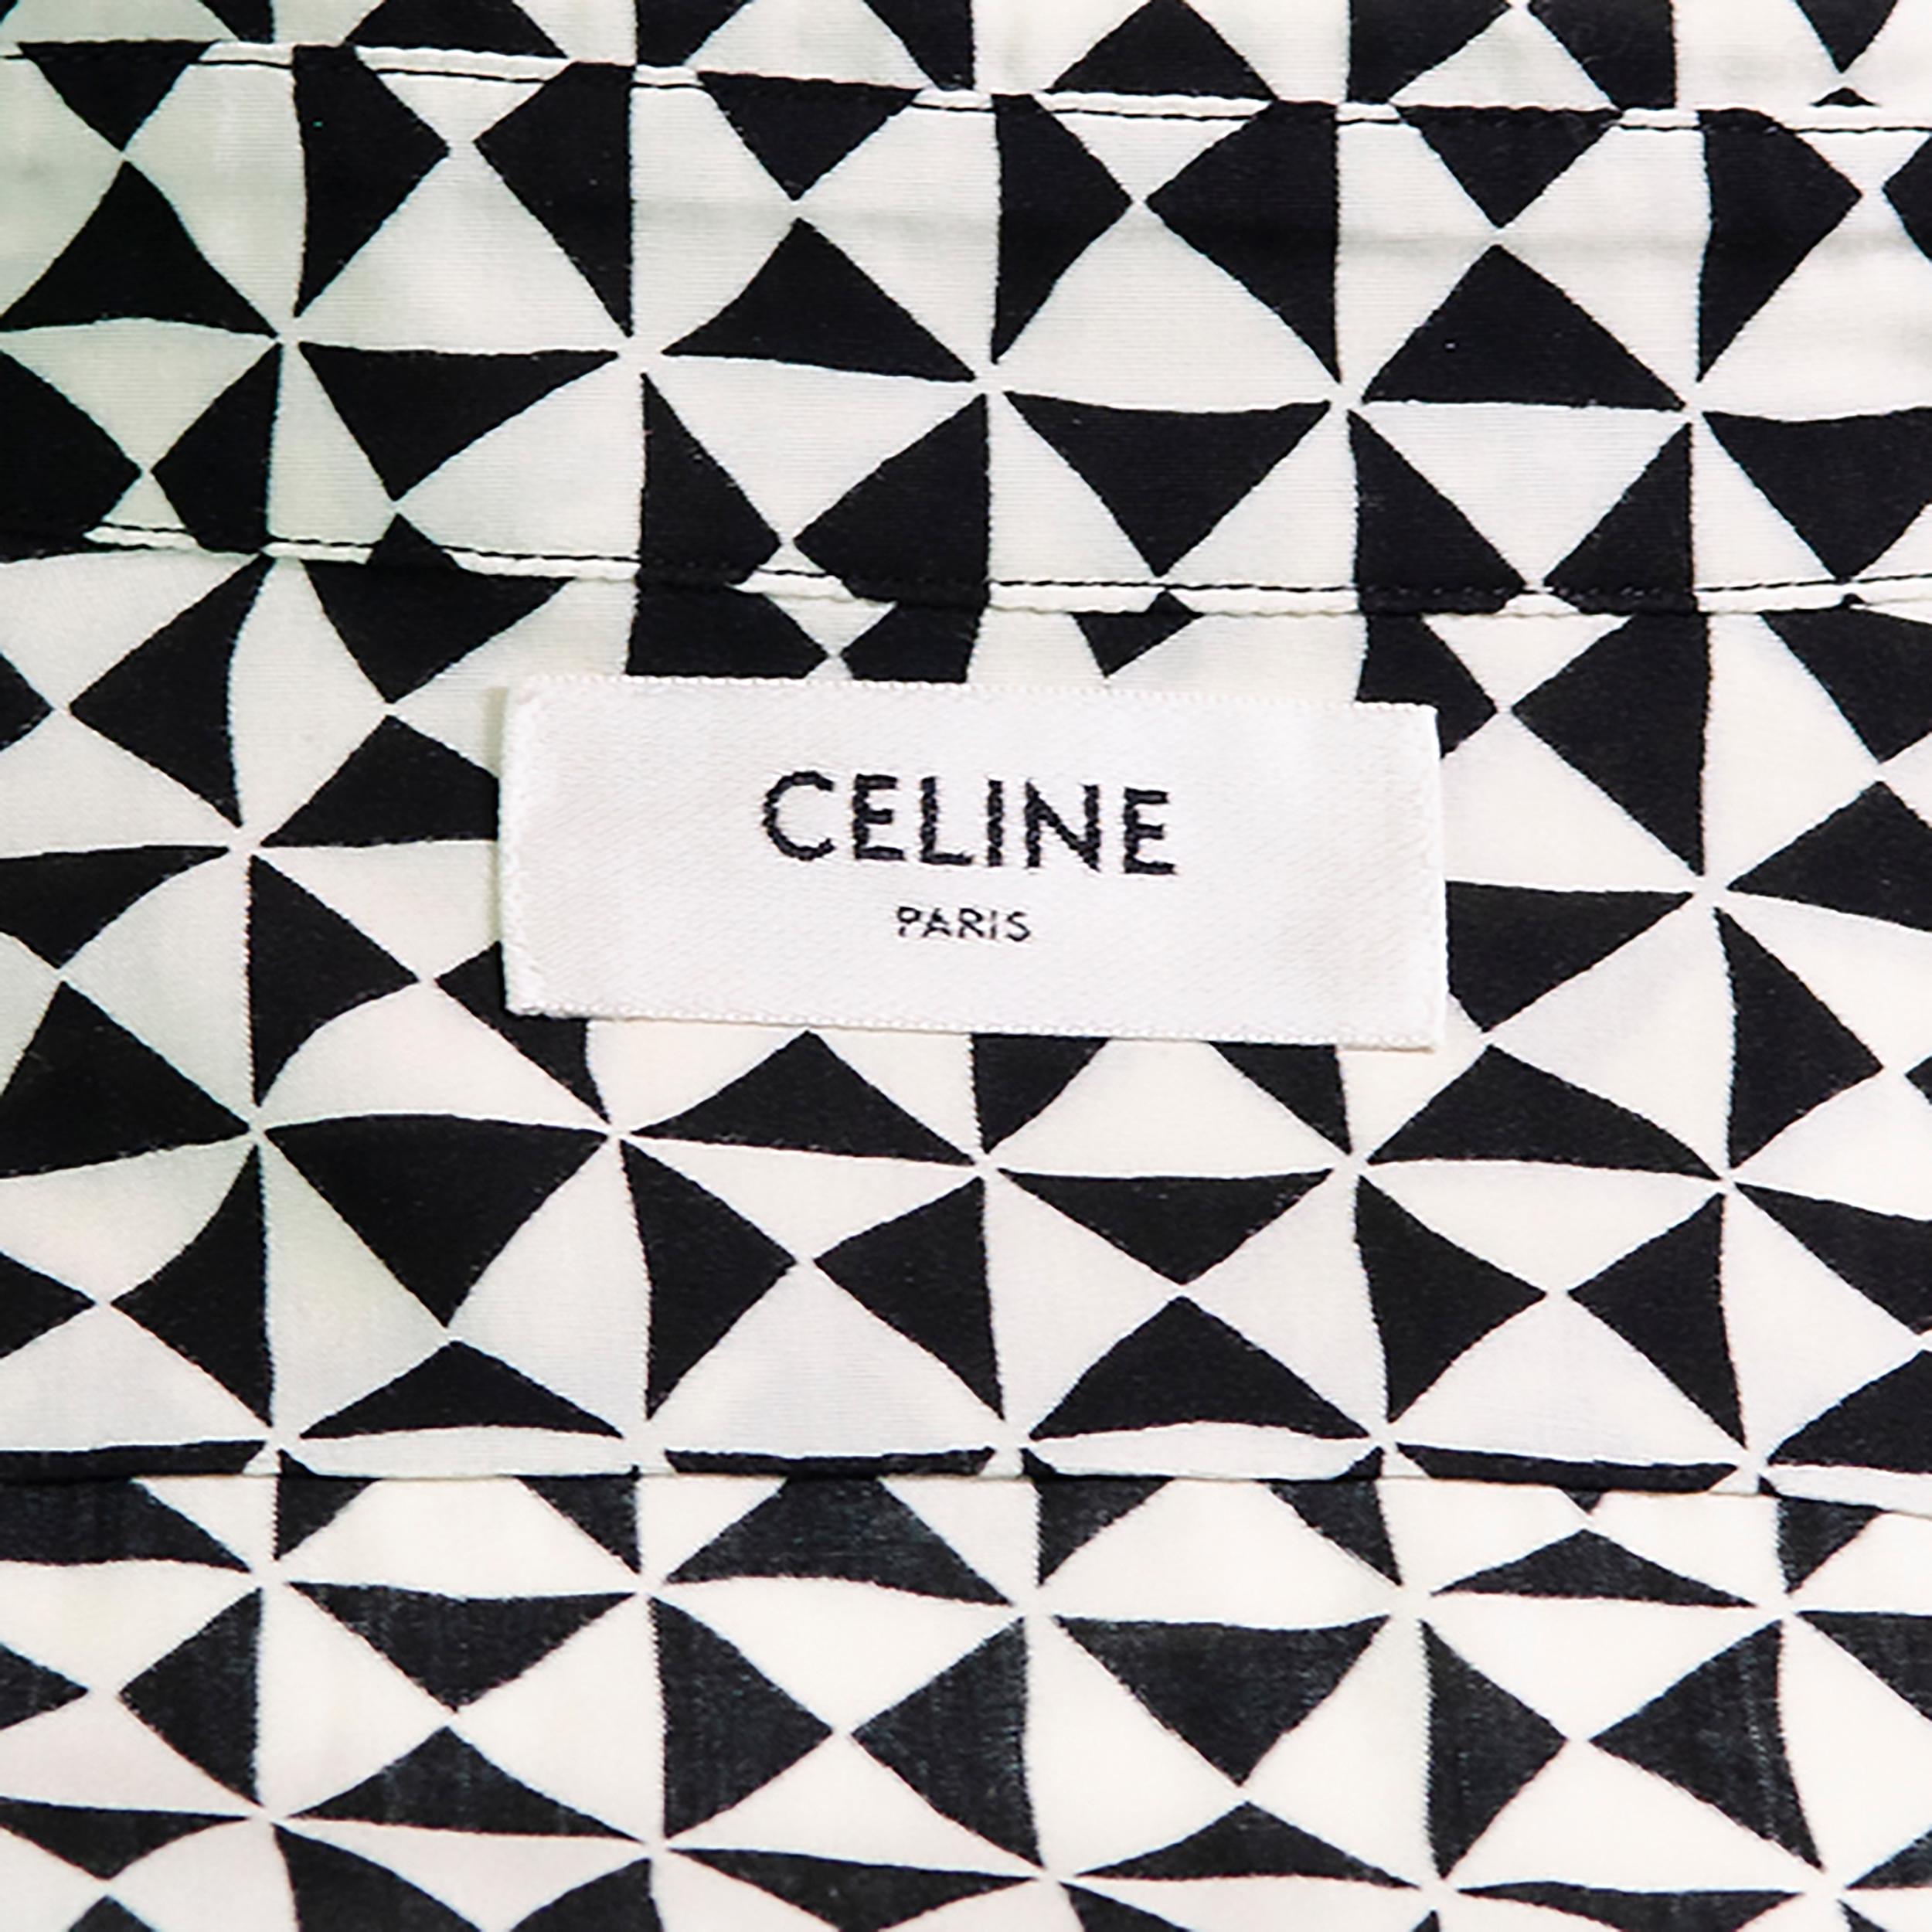 Men's CELINE BY HEDI SLIMANE 70's Inspired Monochrome Shirt For Sale